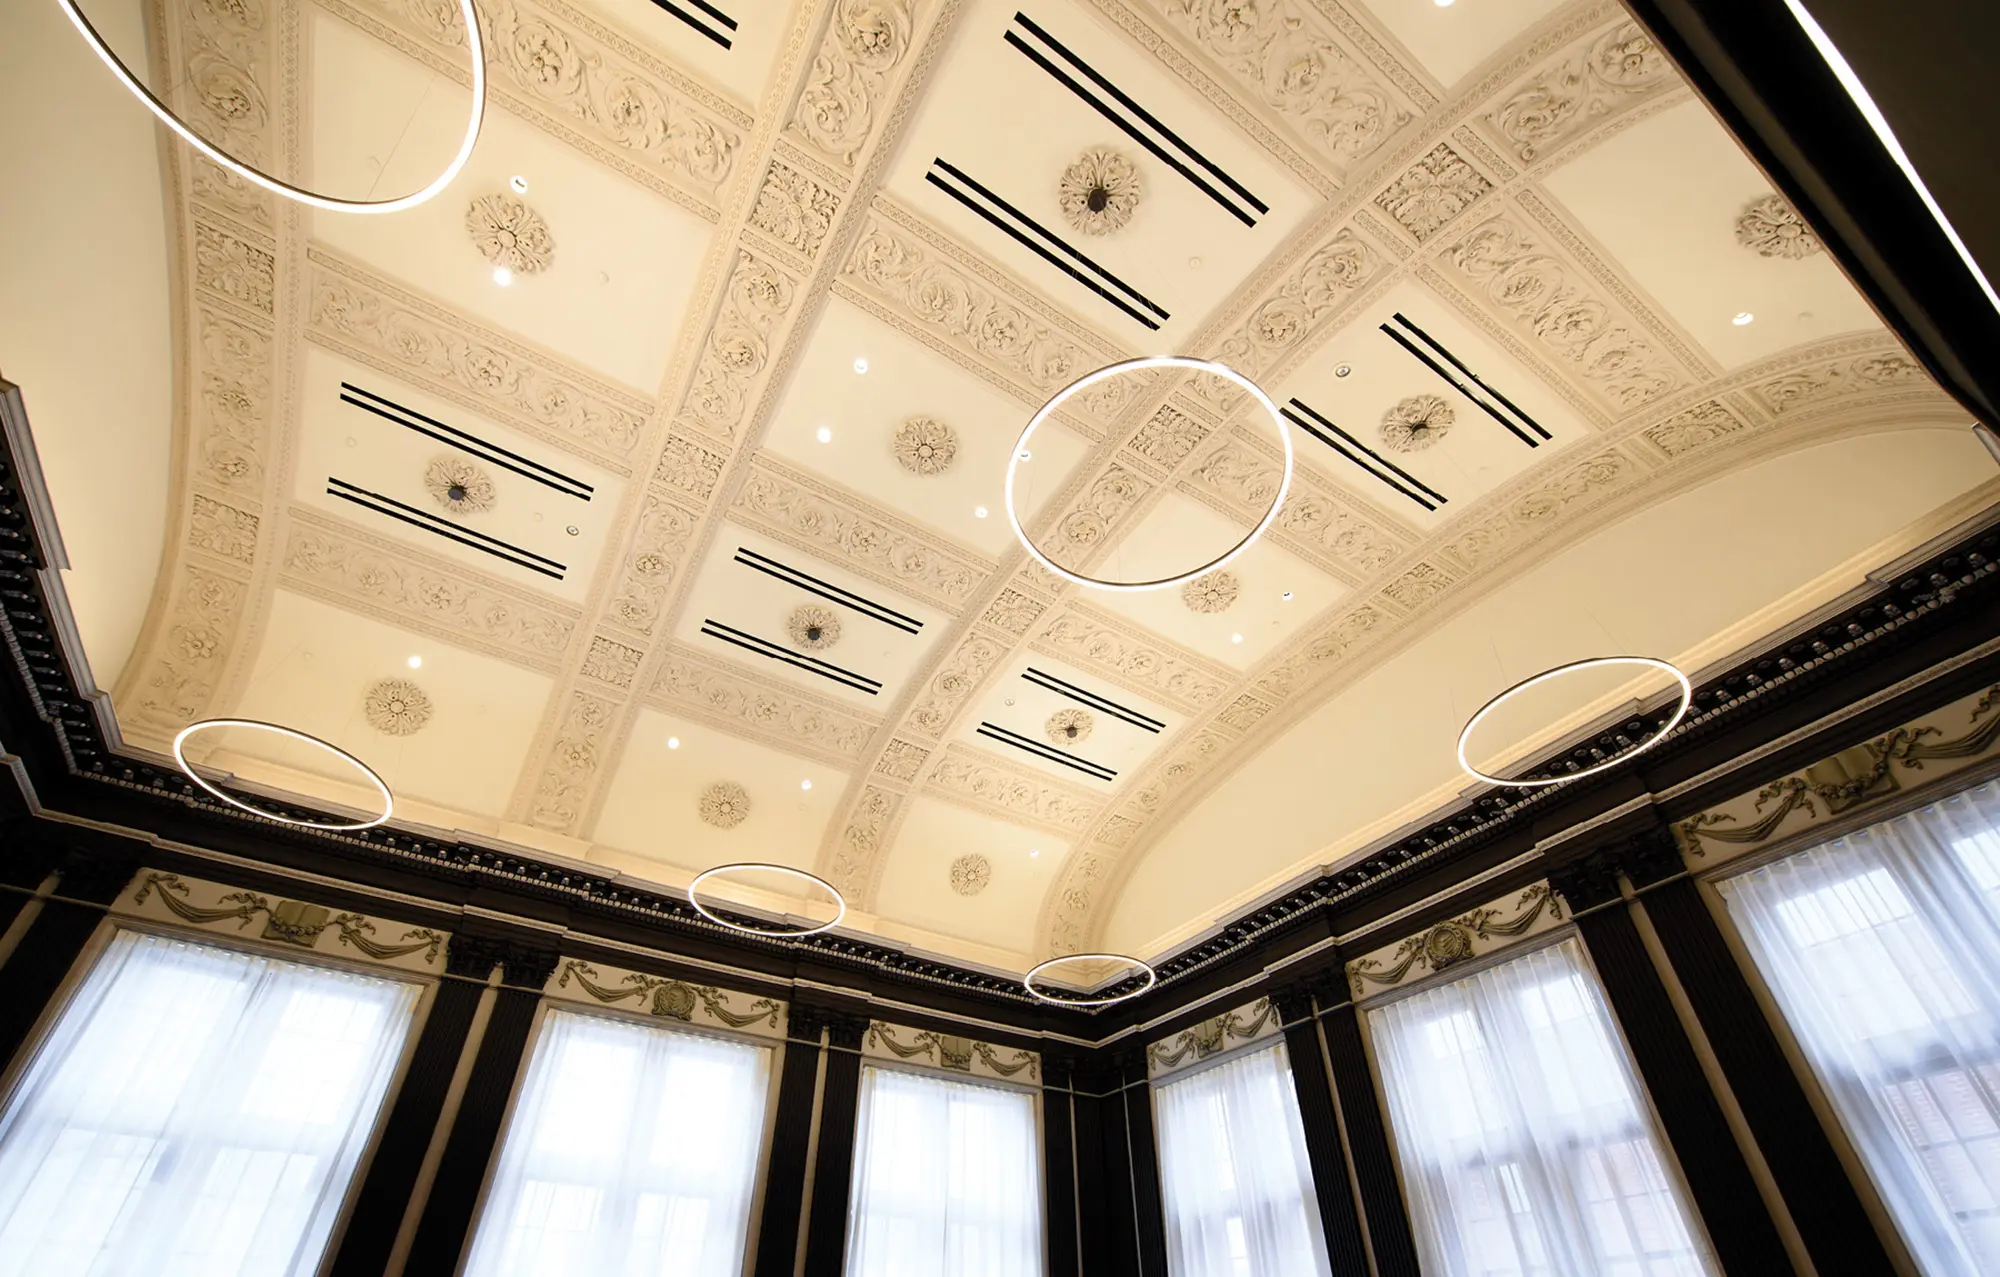 intricate ceiling design of University of Pennsylvania building